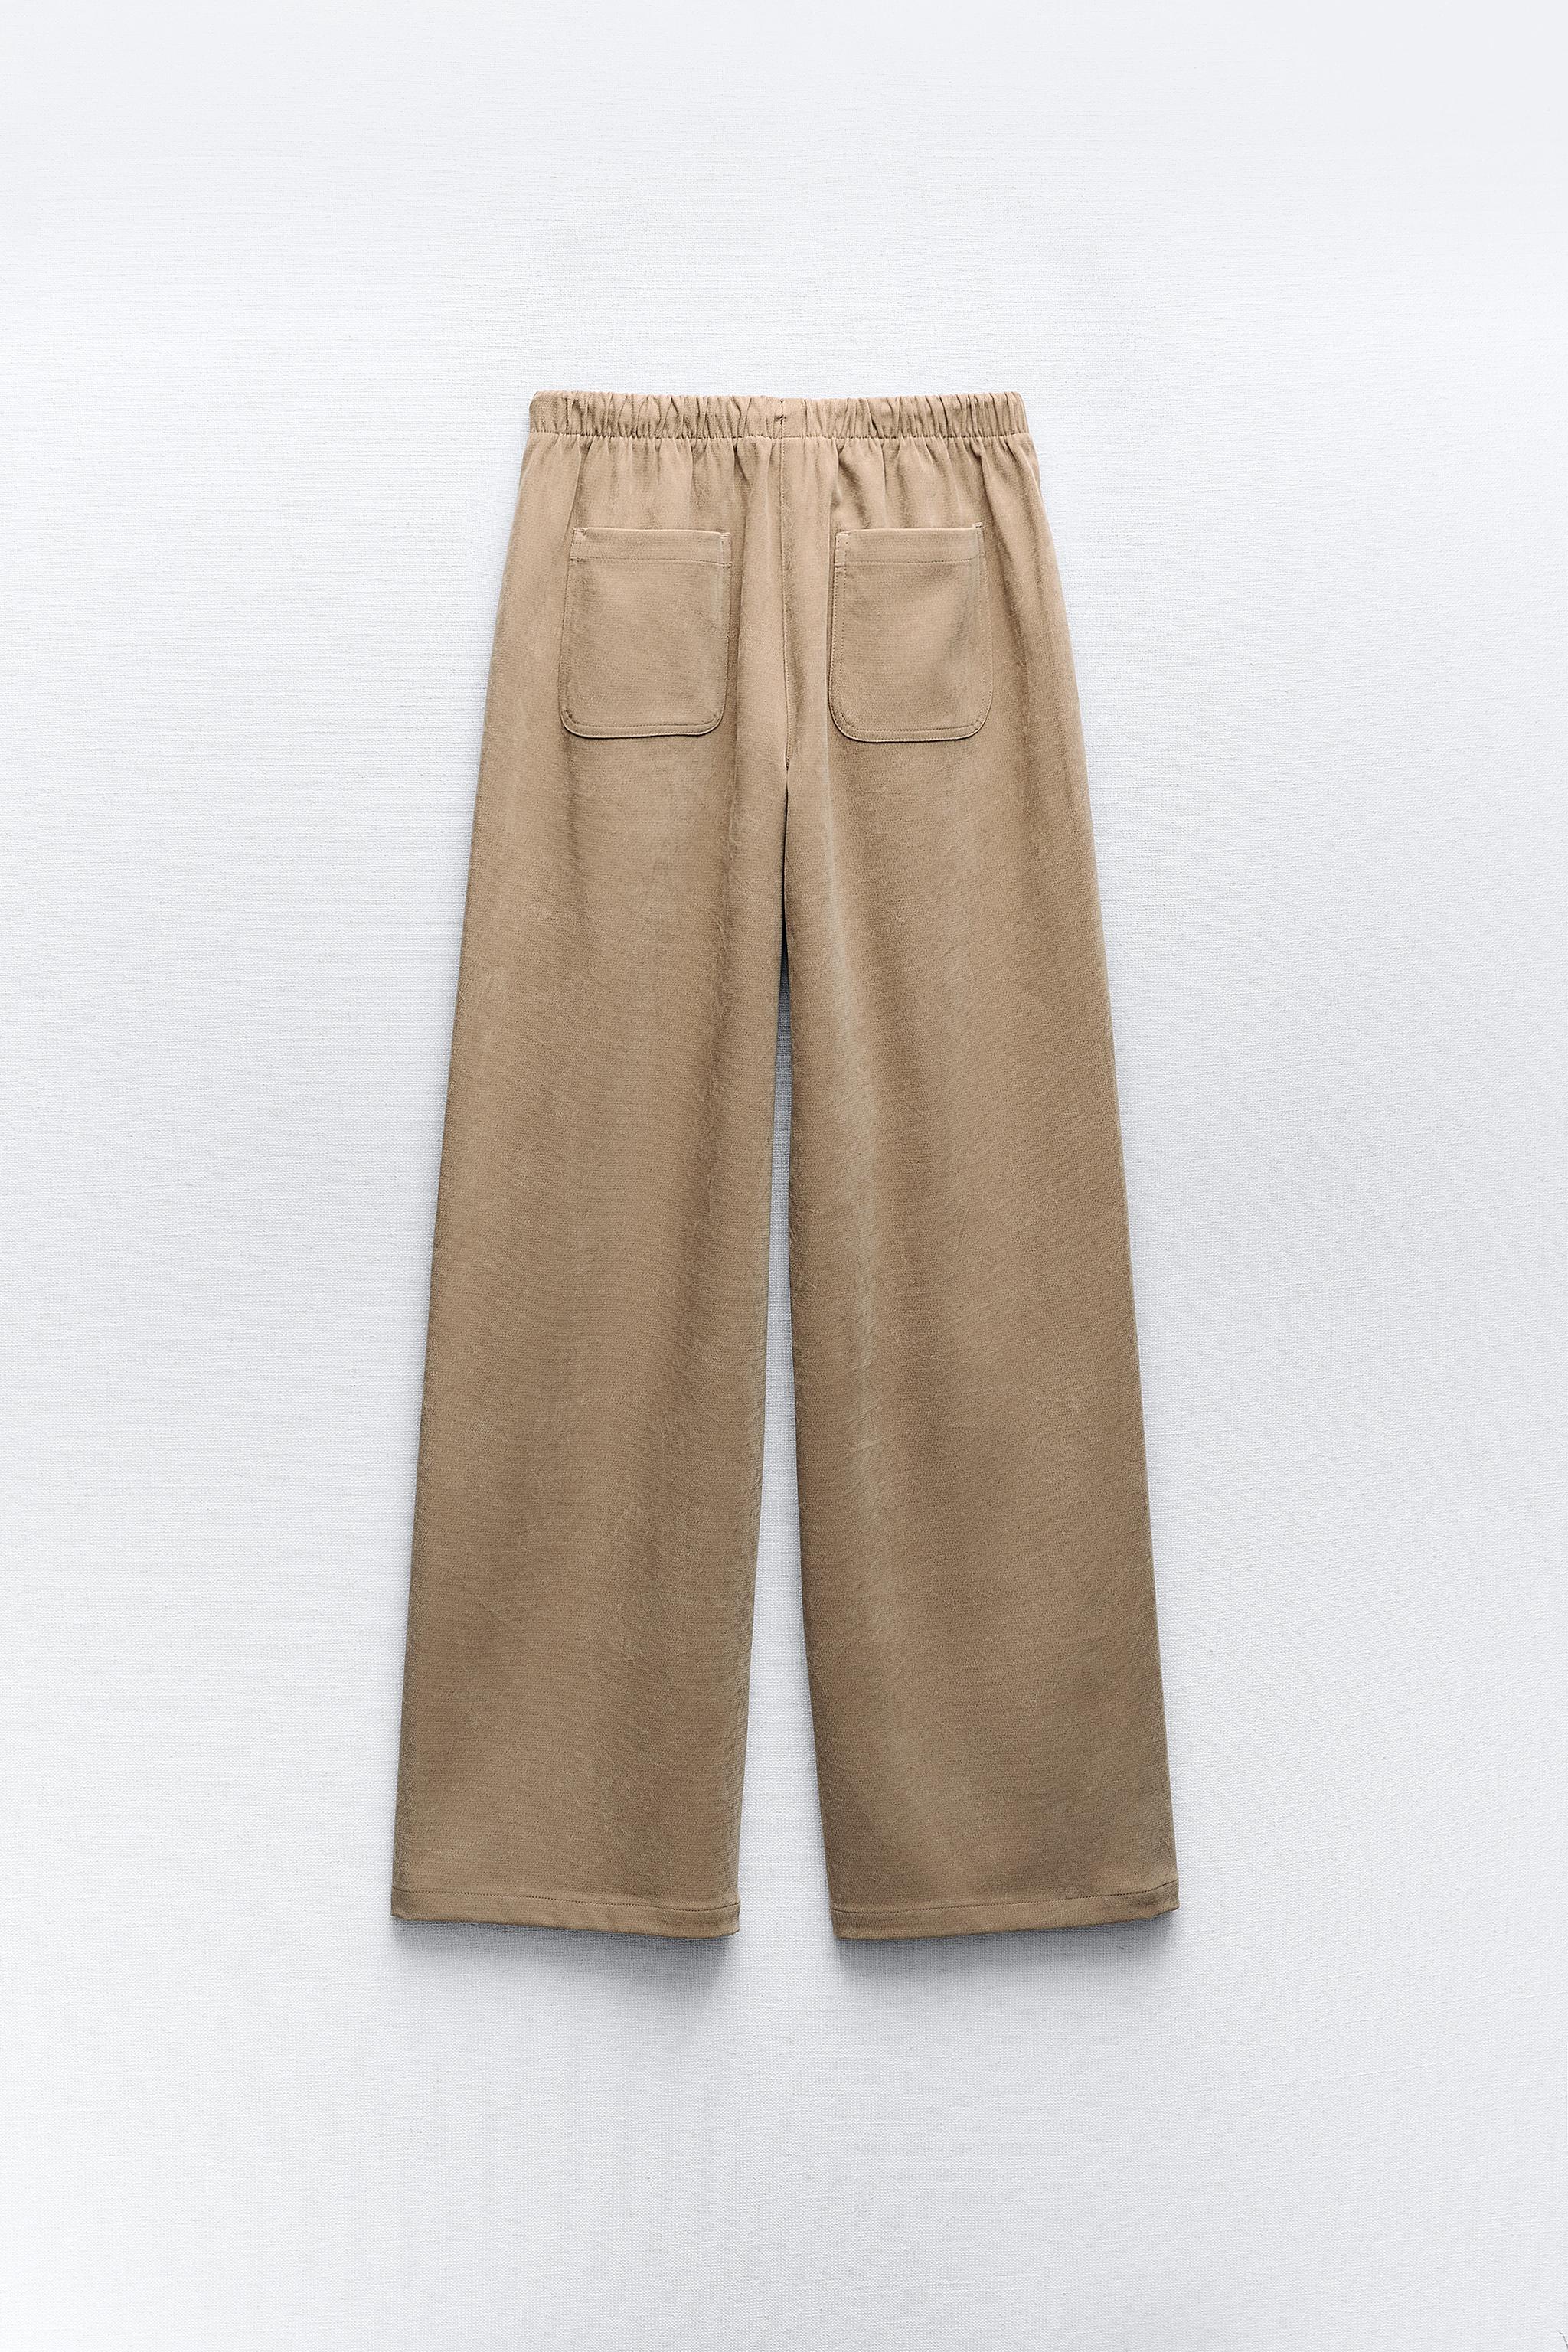 Zara Wide Leg Camel Trousers Pants Size S M Blogger's Favorite NWT